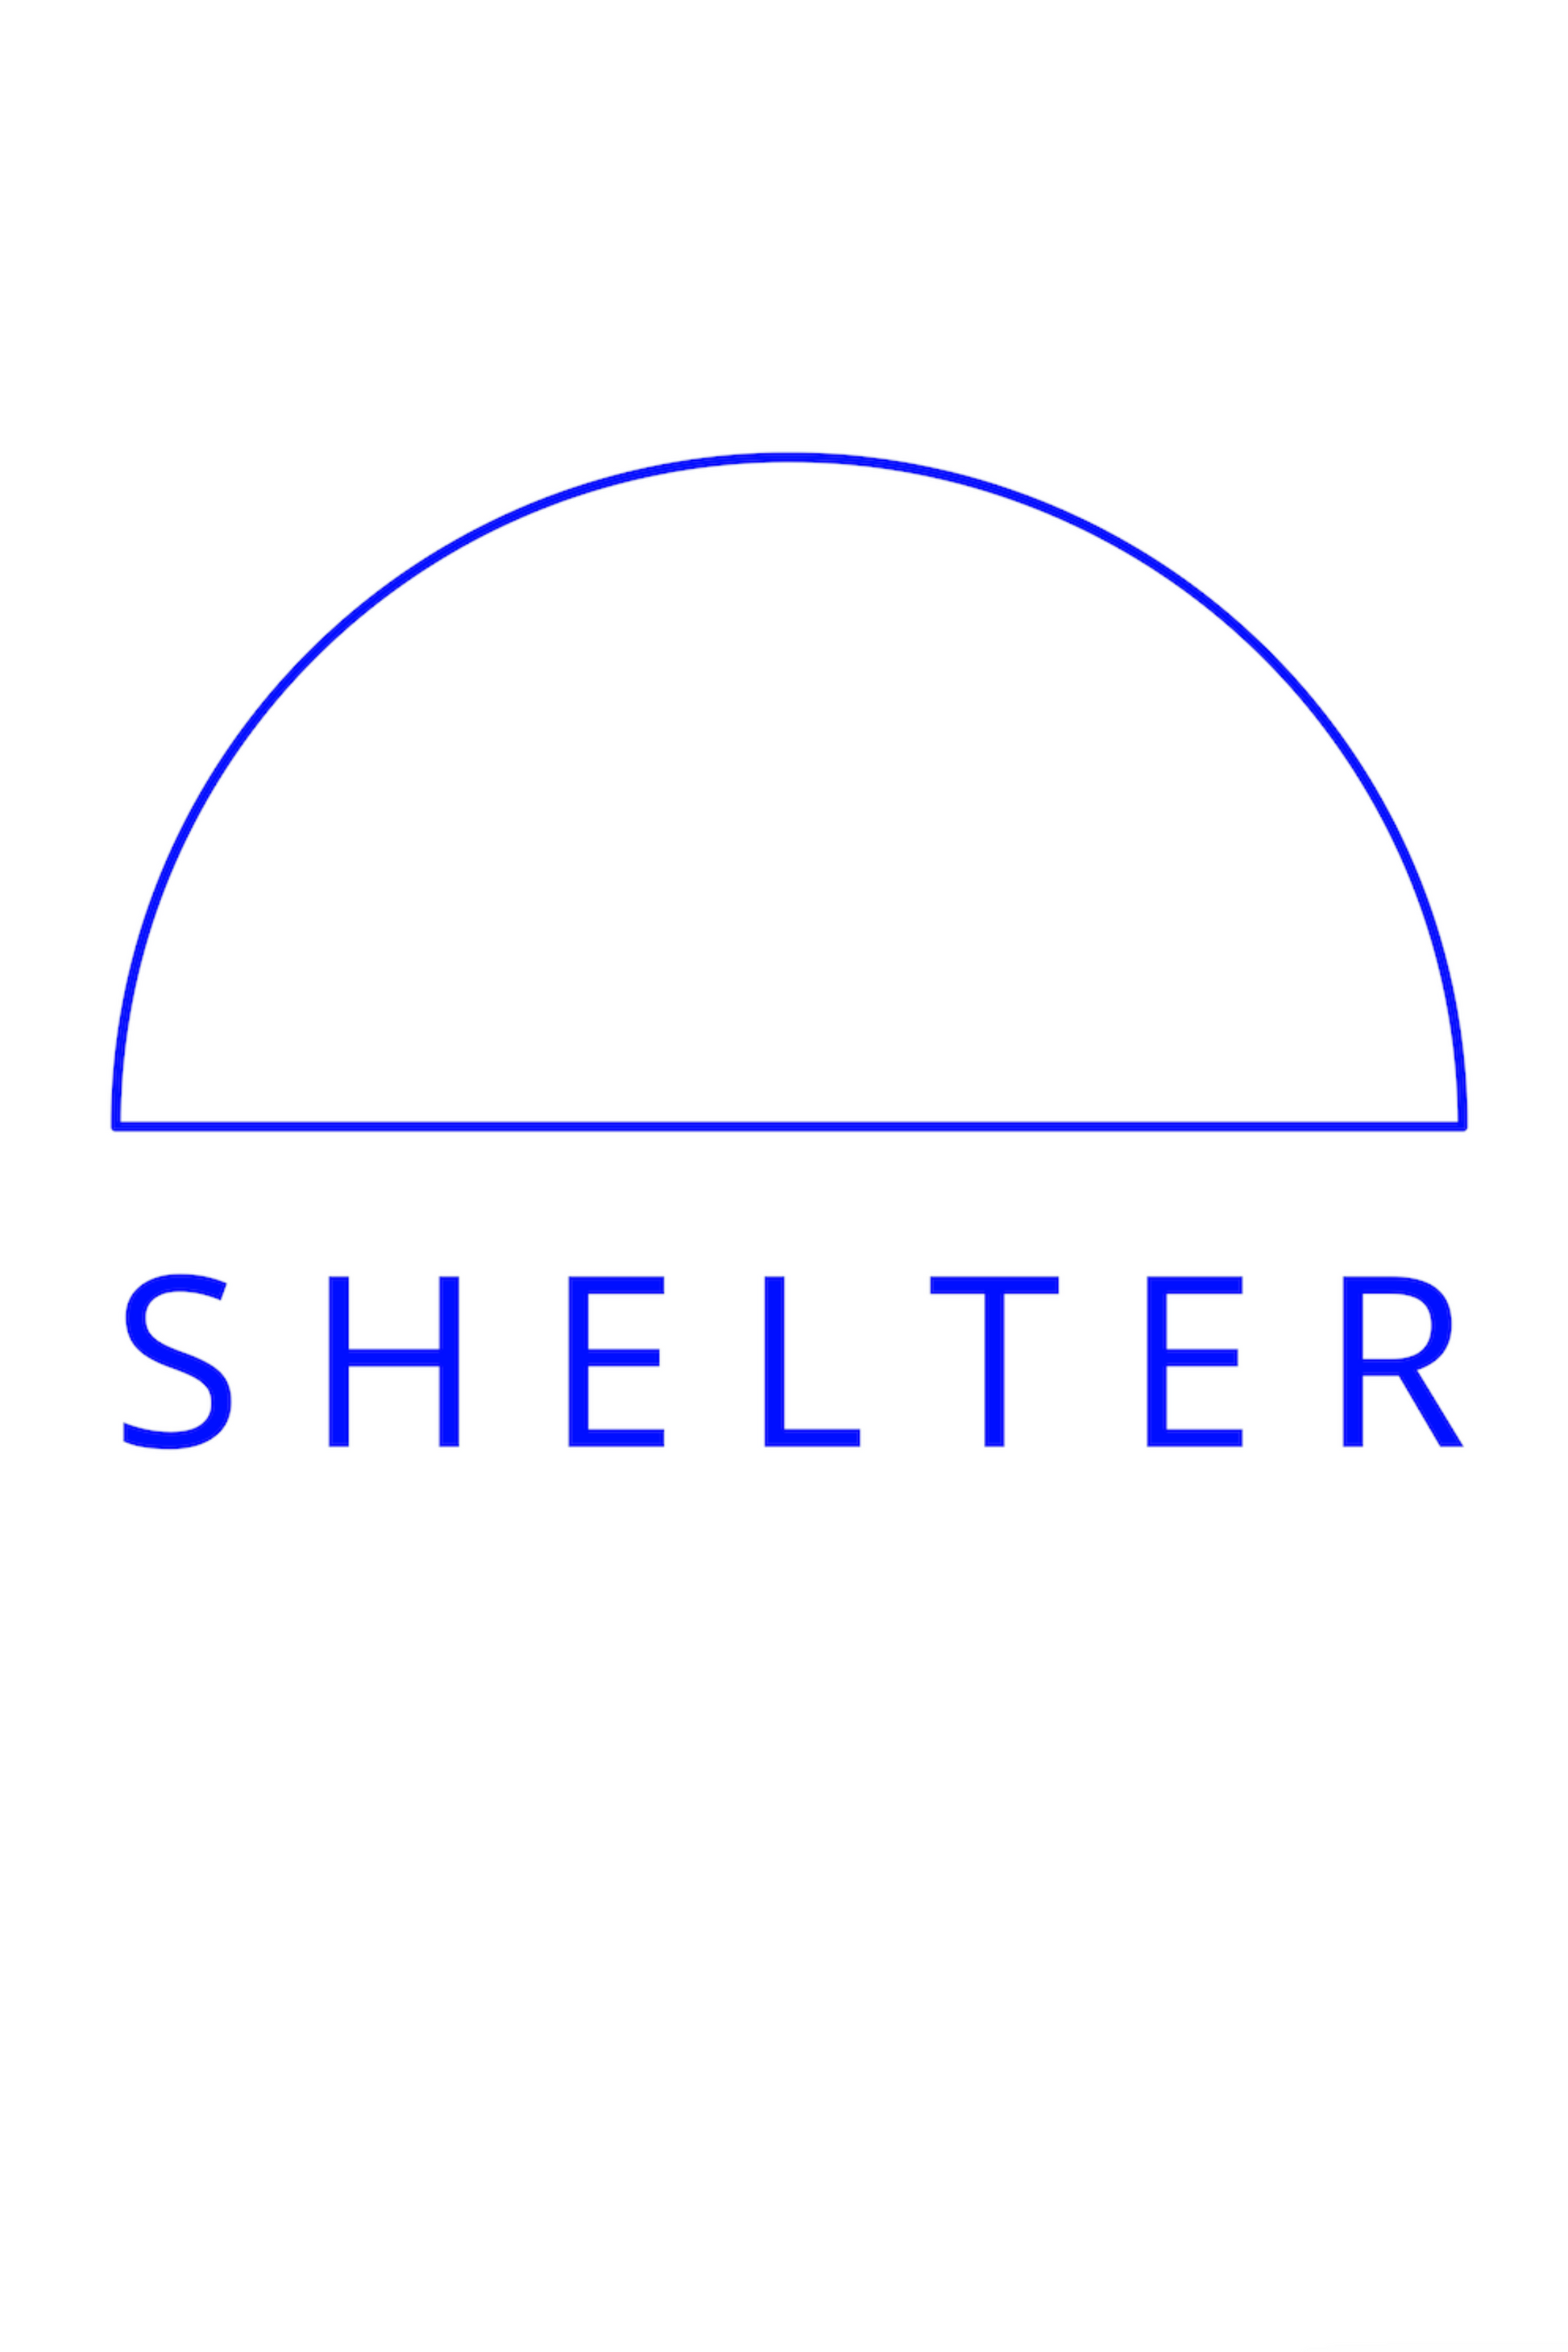 SHELTER GIFT CARD - Seek Shelter